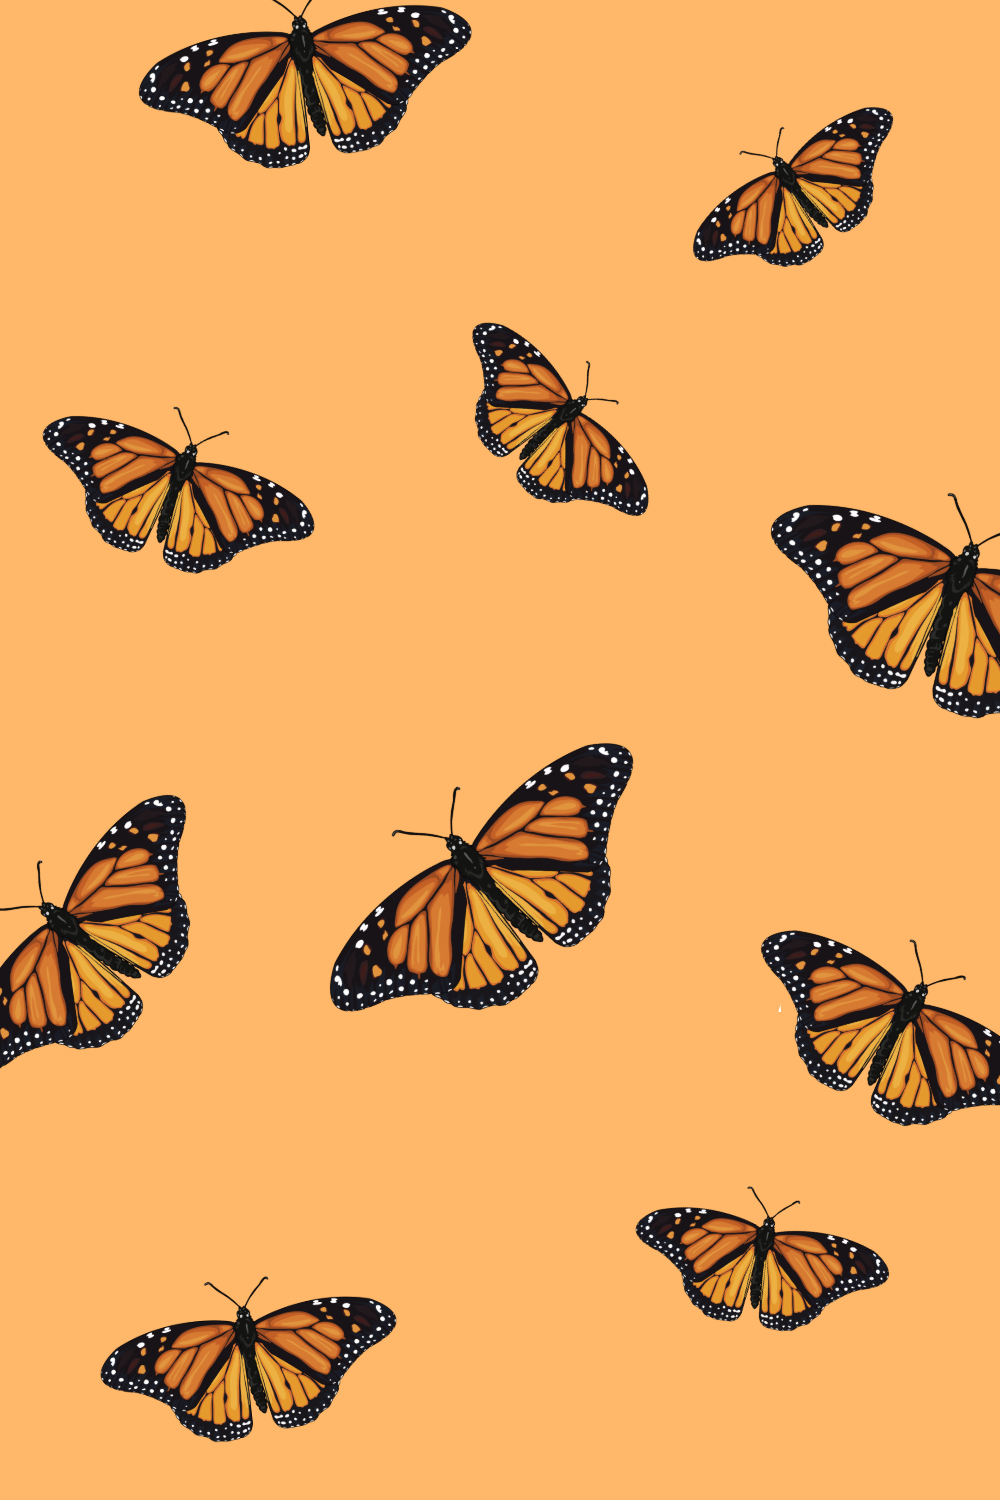 VSCO Butterfly Wallpaper Free VSCO Butterfly Background